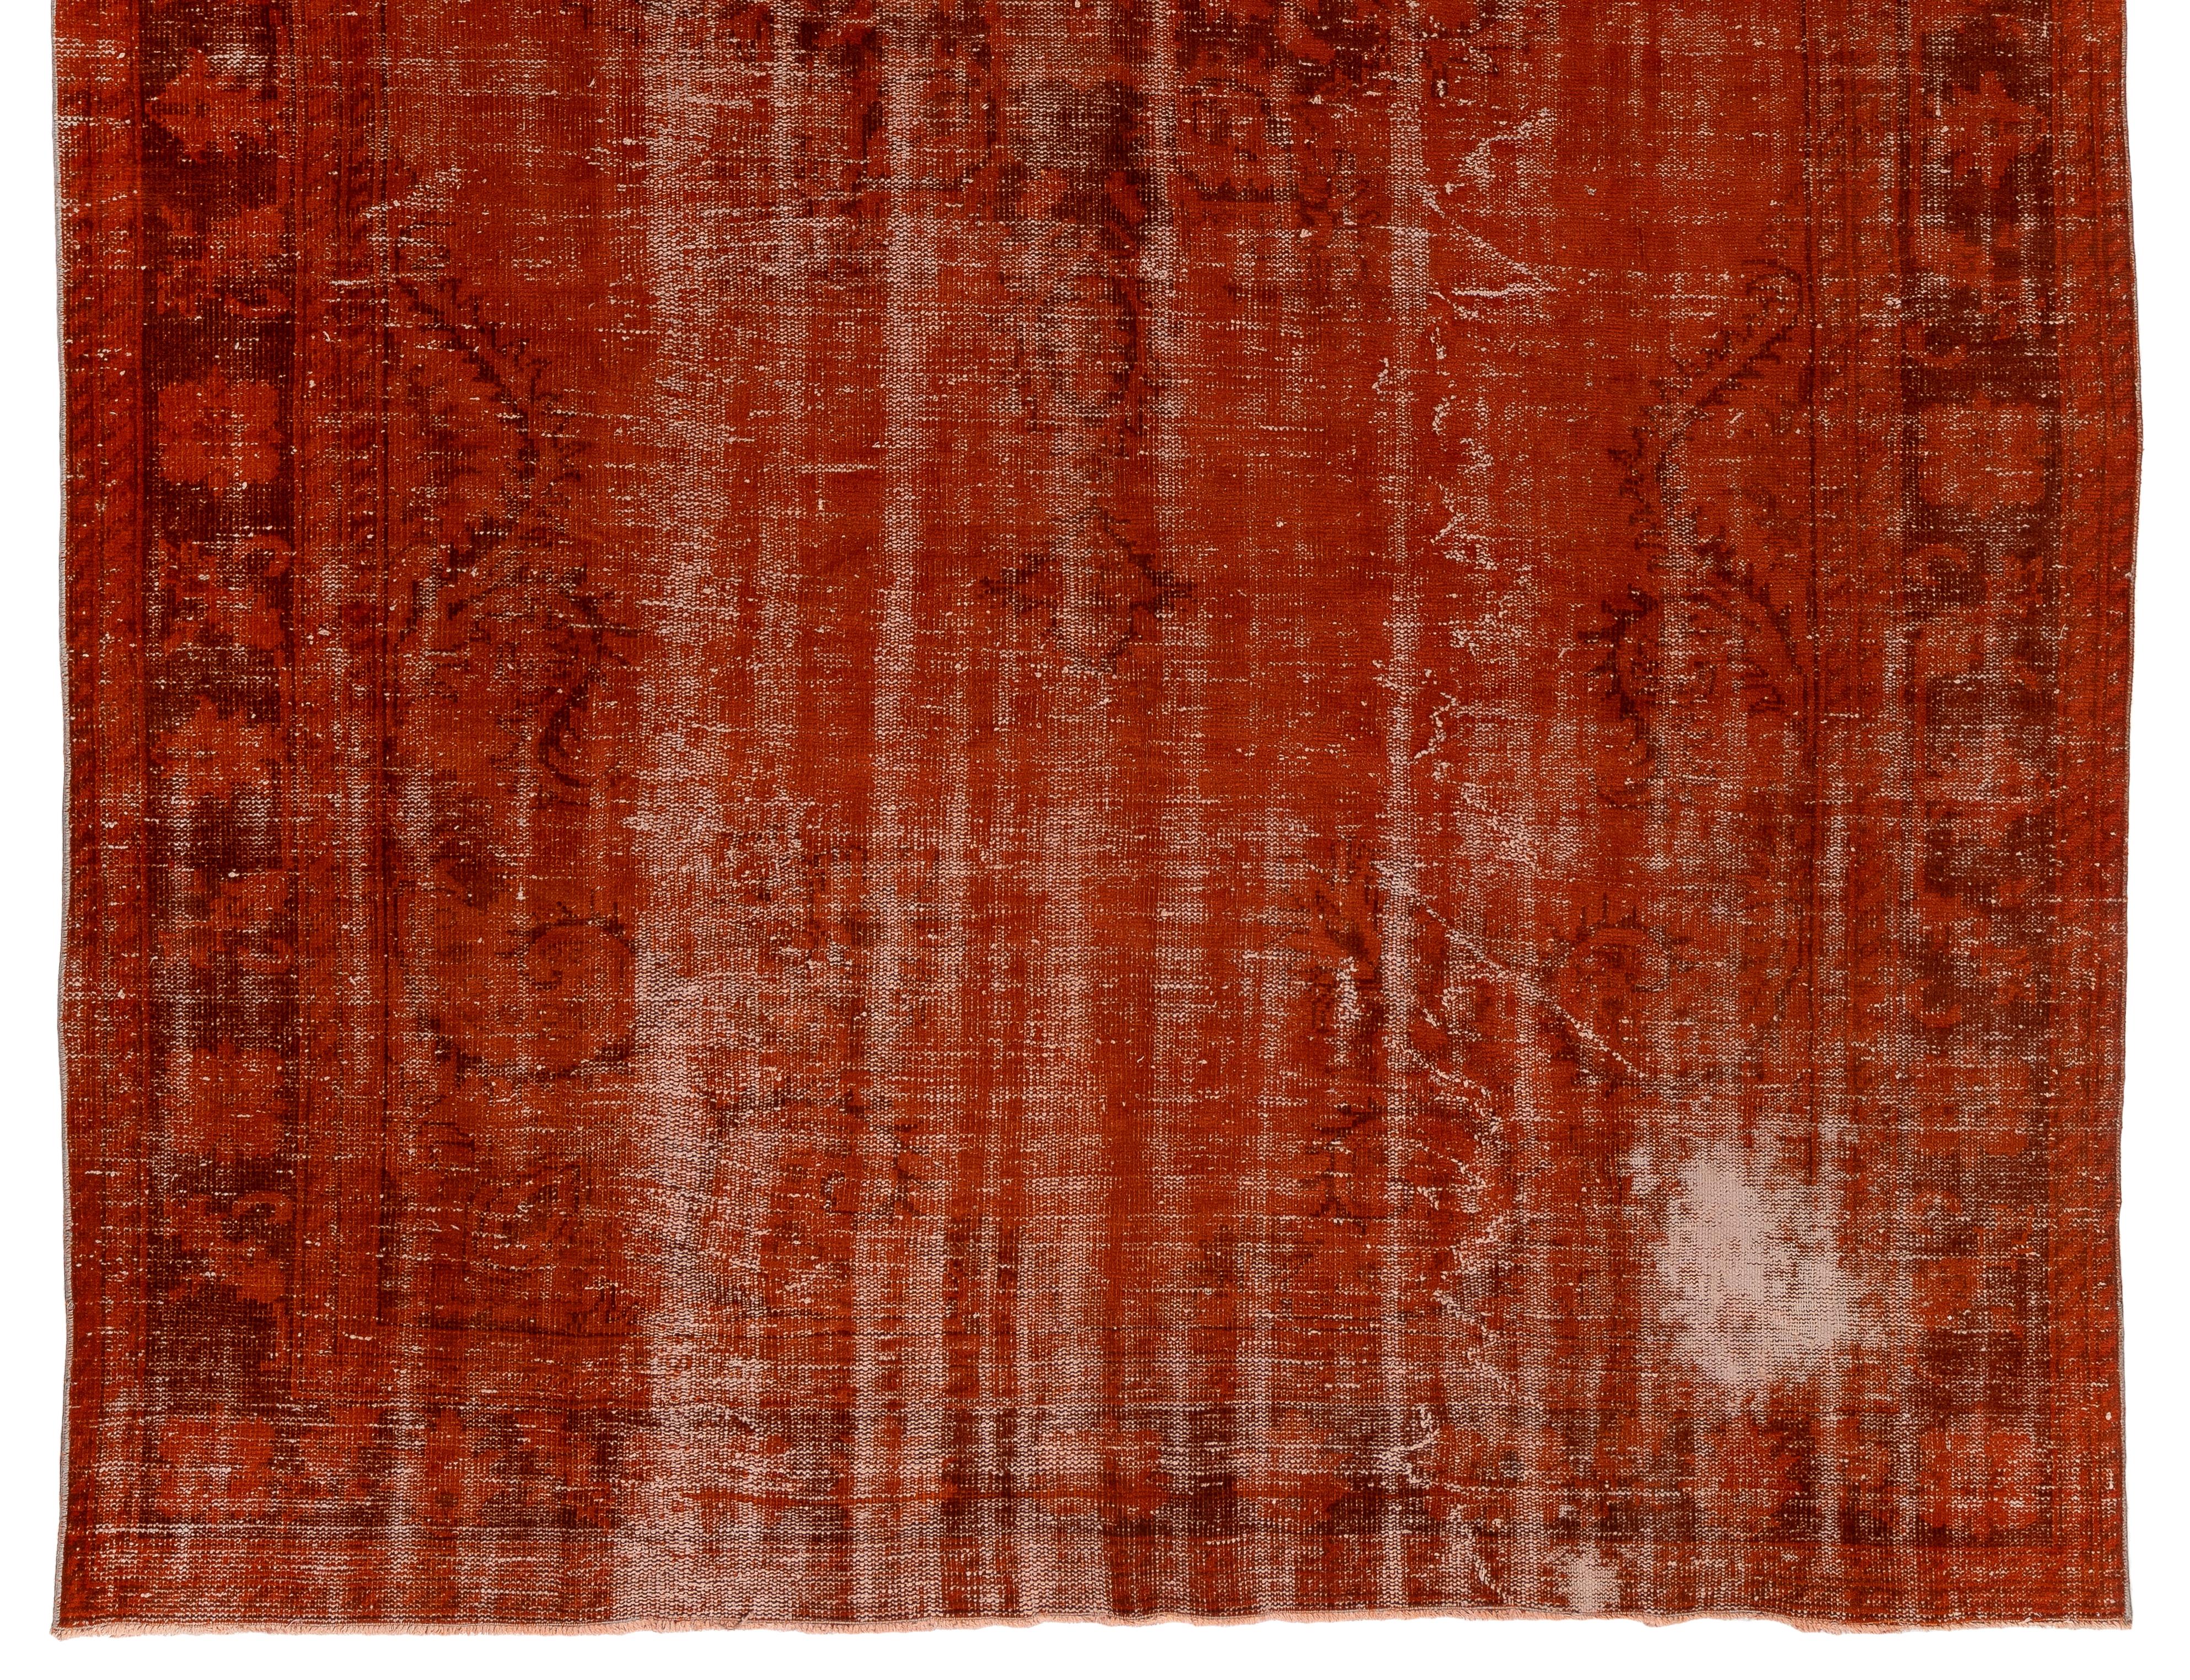 Modern 7.6x11.4 Ft Handmade Turkish Area Rug in Orange. Mid-Century Distressed Carpet For Sale